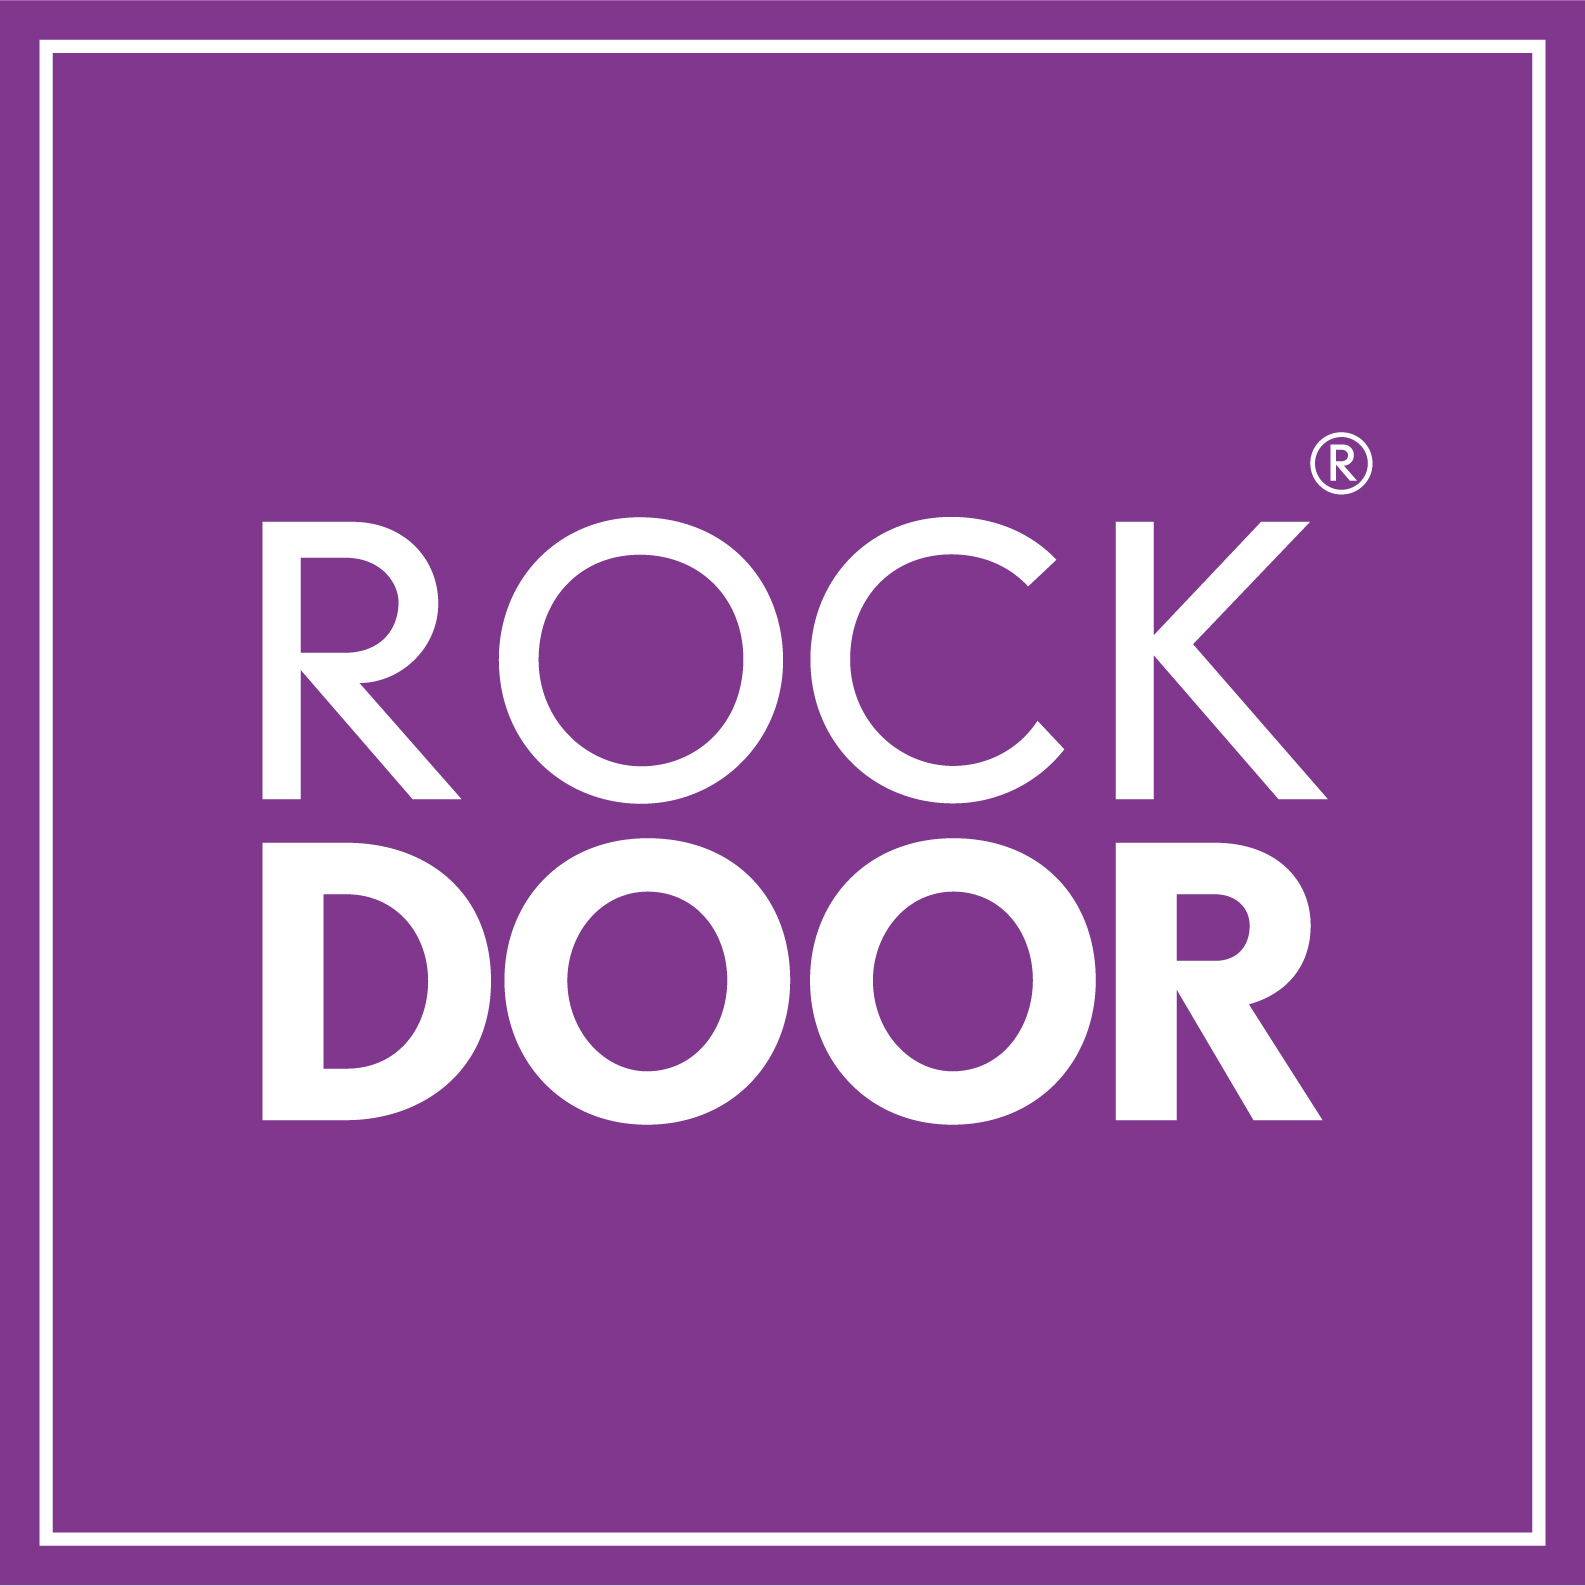 Rockdoor renew with Secured by Design